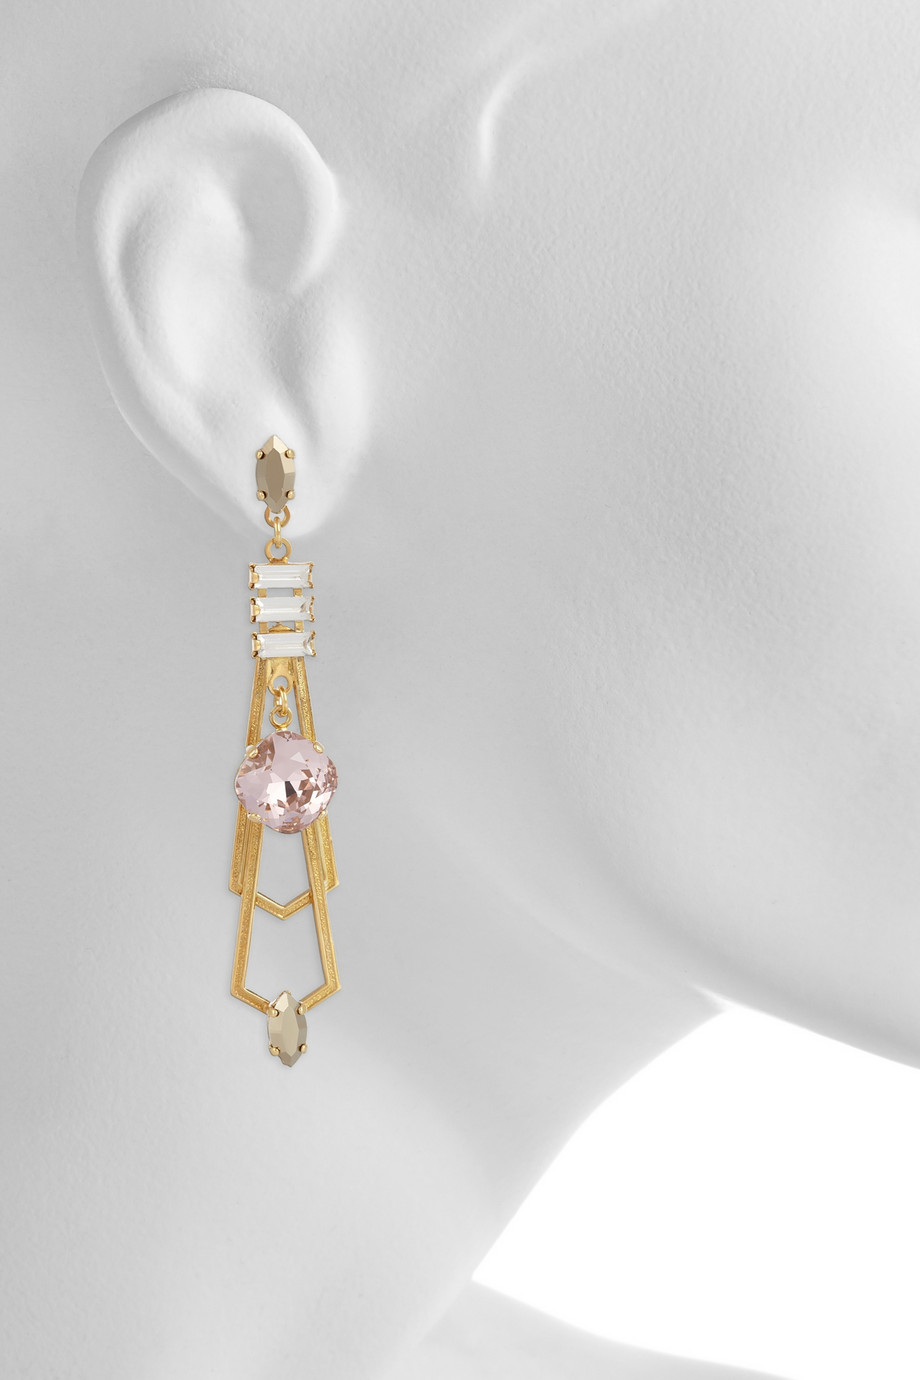 Lyst - Erickson beamon Goldplated Swarovski Crystal Earrings in Metallic